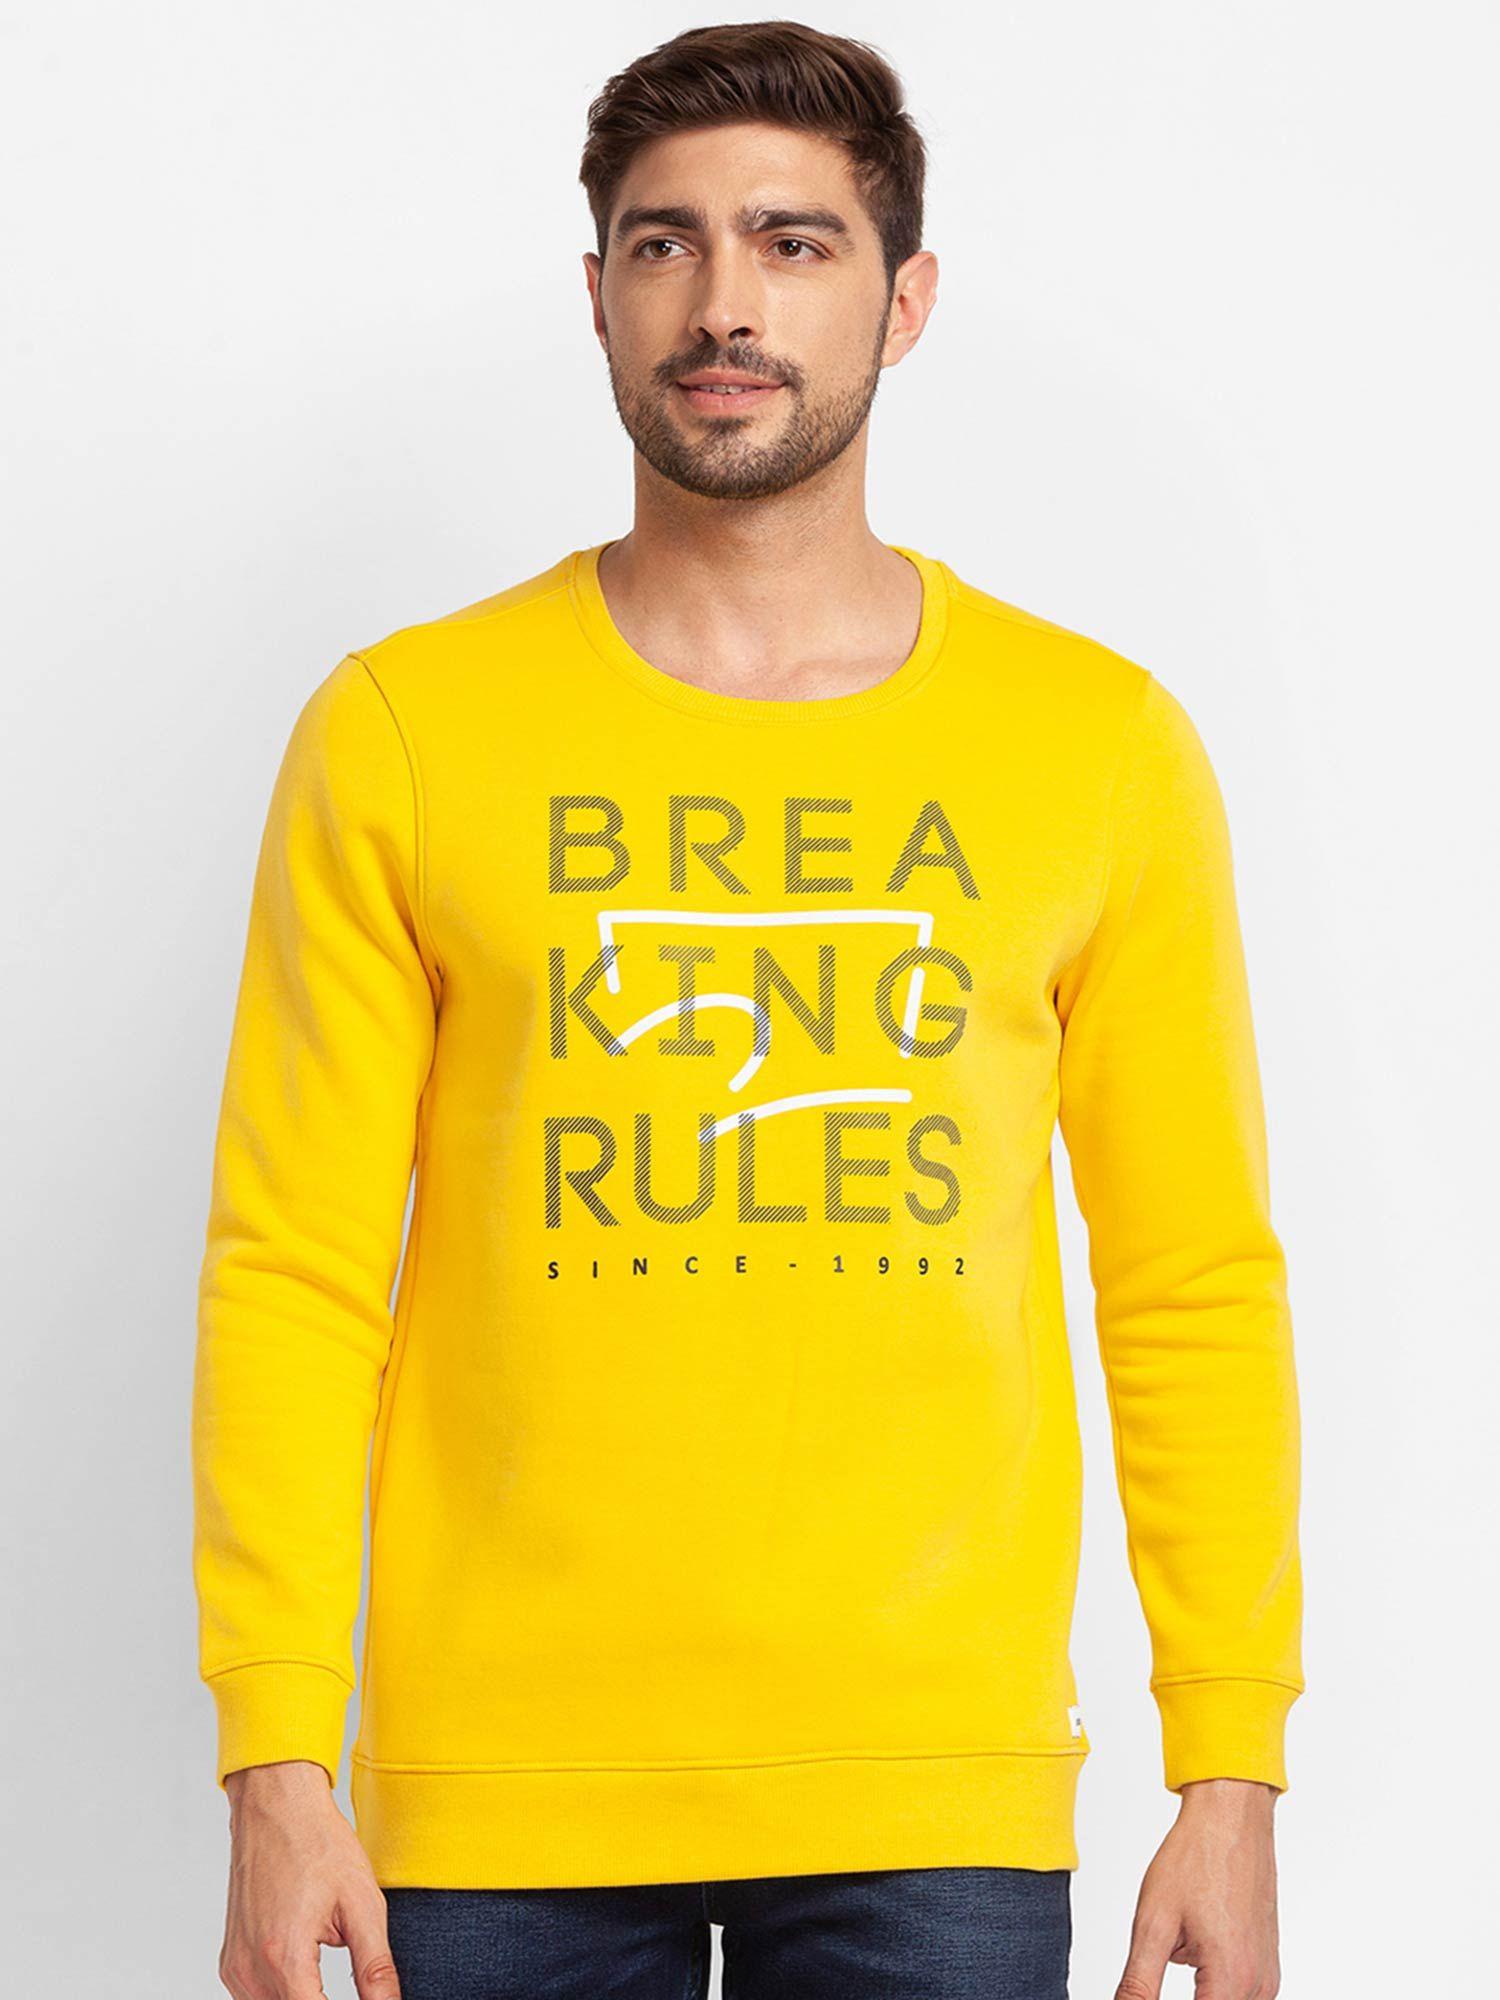 chrome-yellow-cotton-full-sleeve-round-neck-sweatshirt-for-men